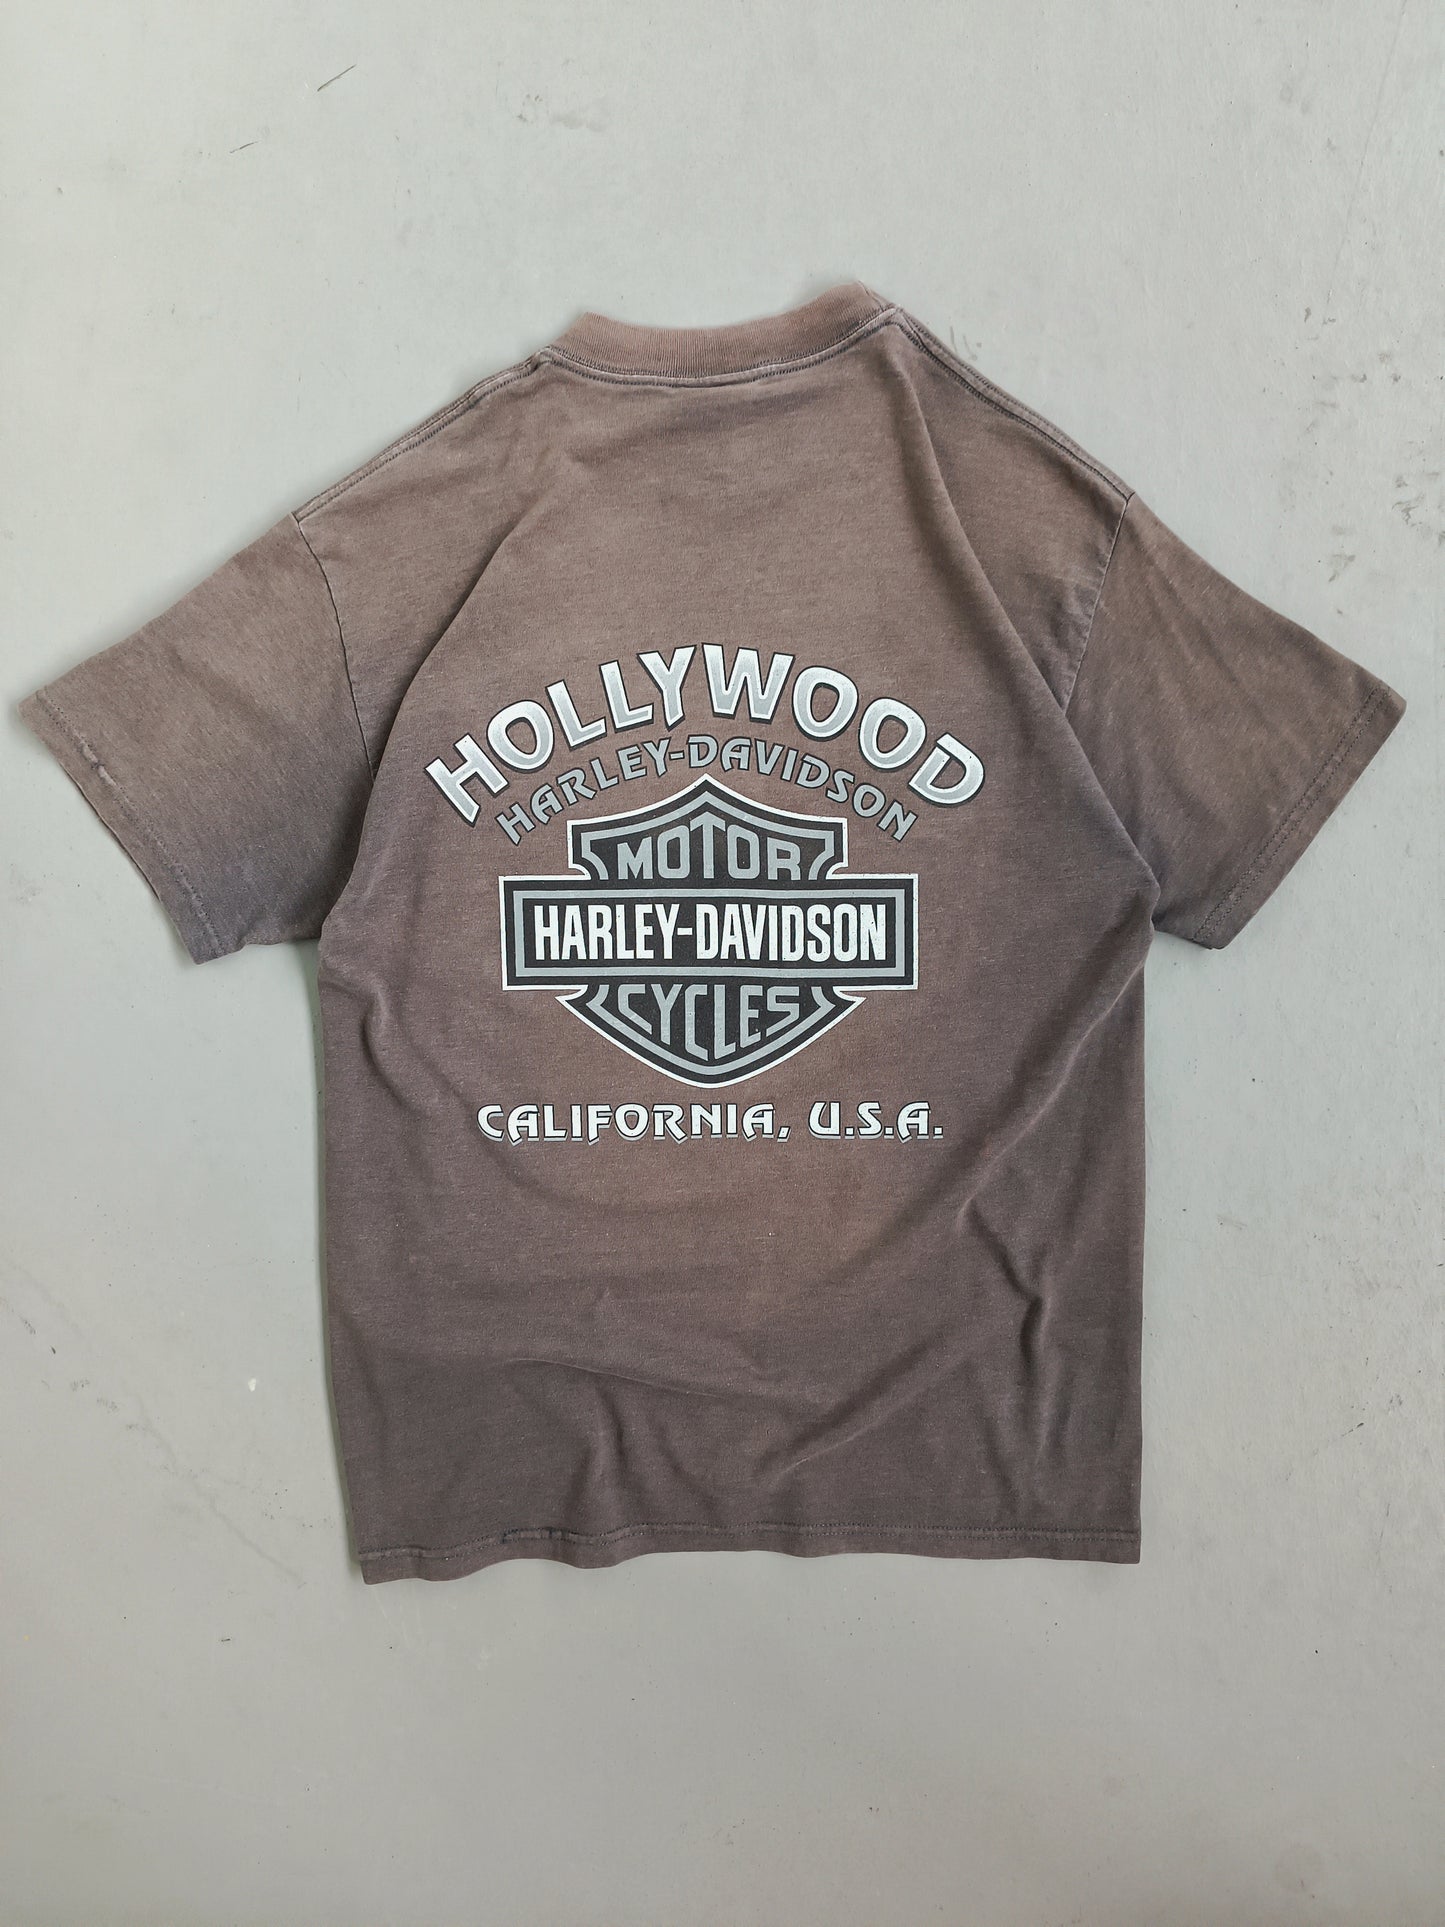 Harley Davidson Hollywood - M